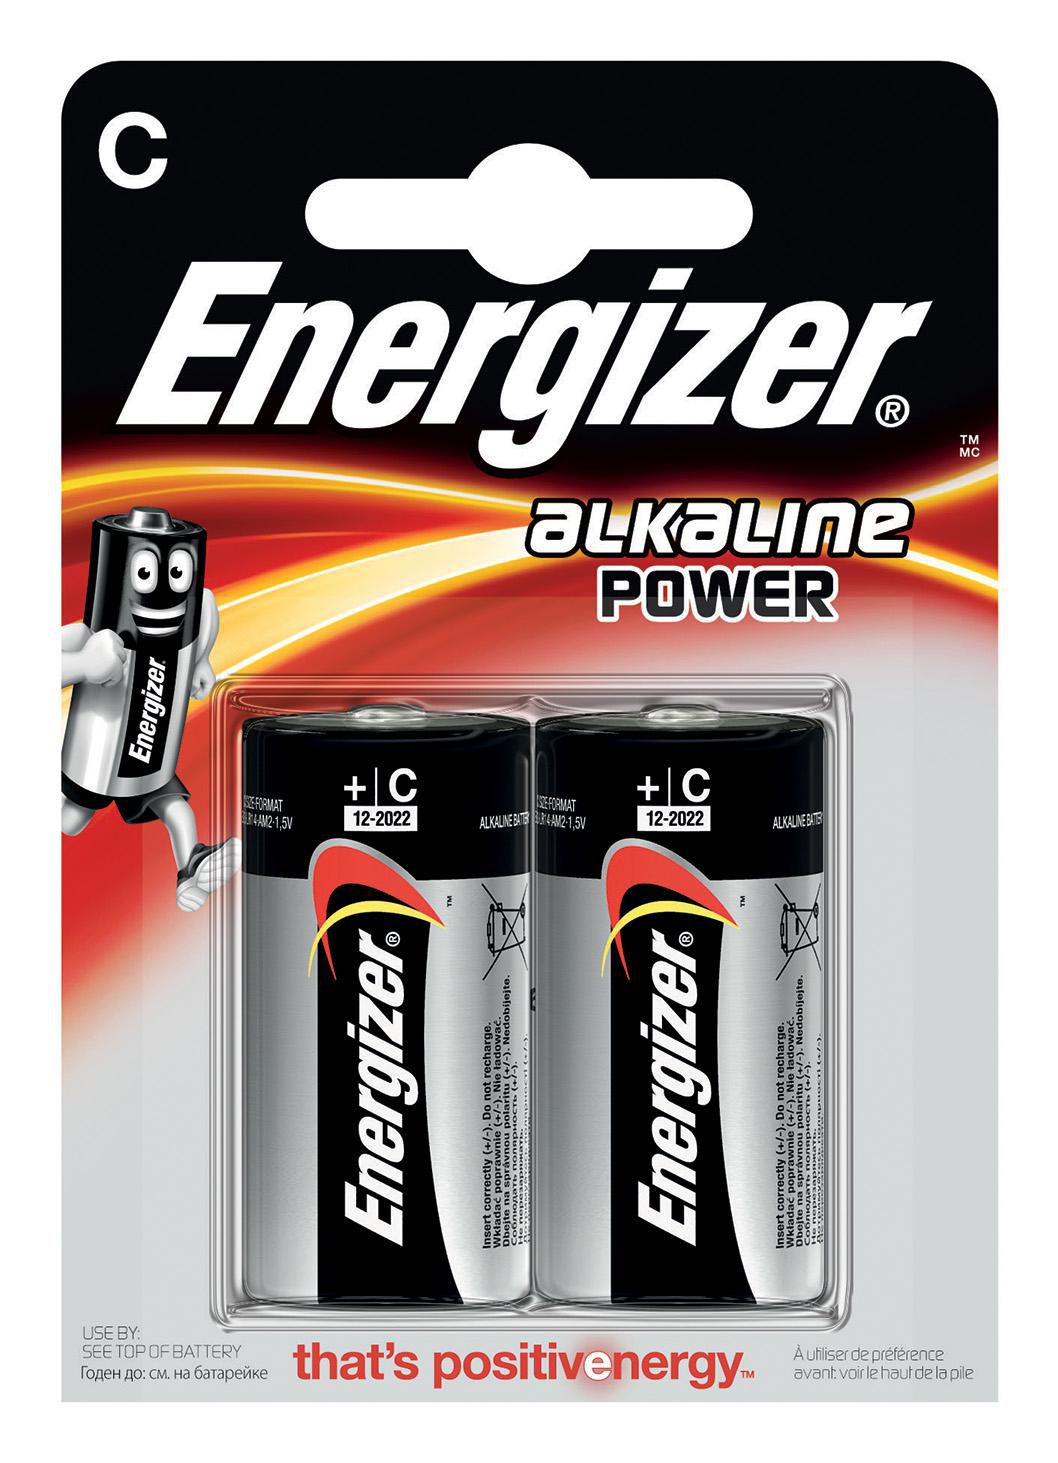 Energizer 7638900297324 Battery CLR14 Alkaline Power 